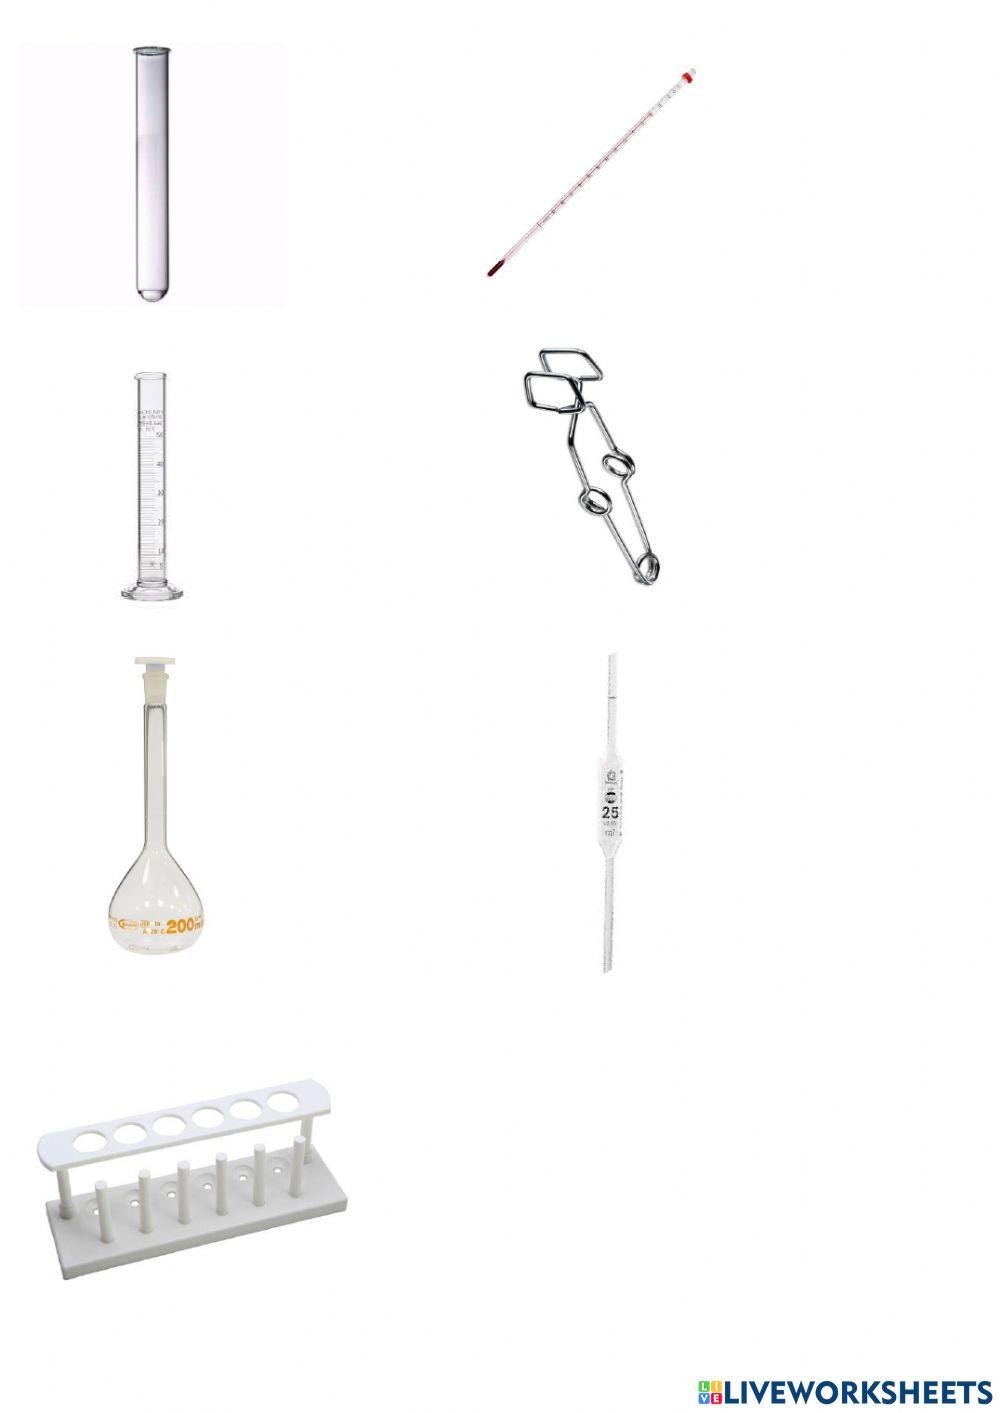 Laboratory apparatus